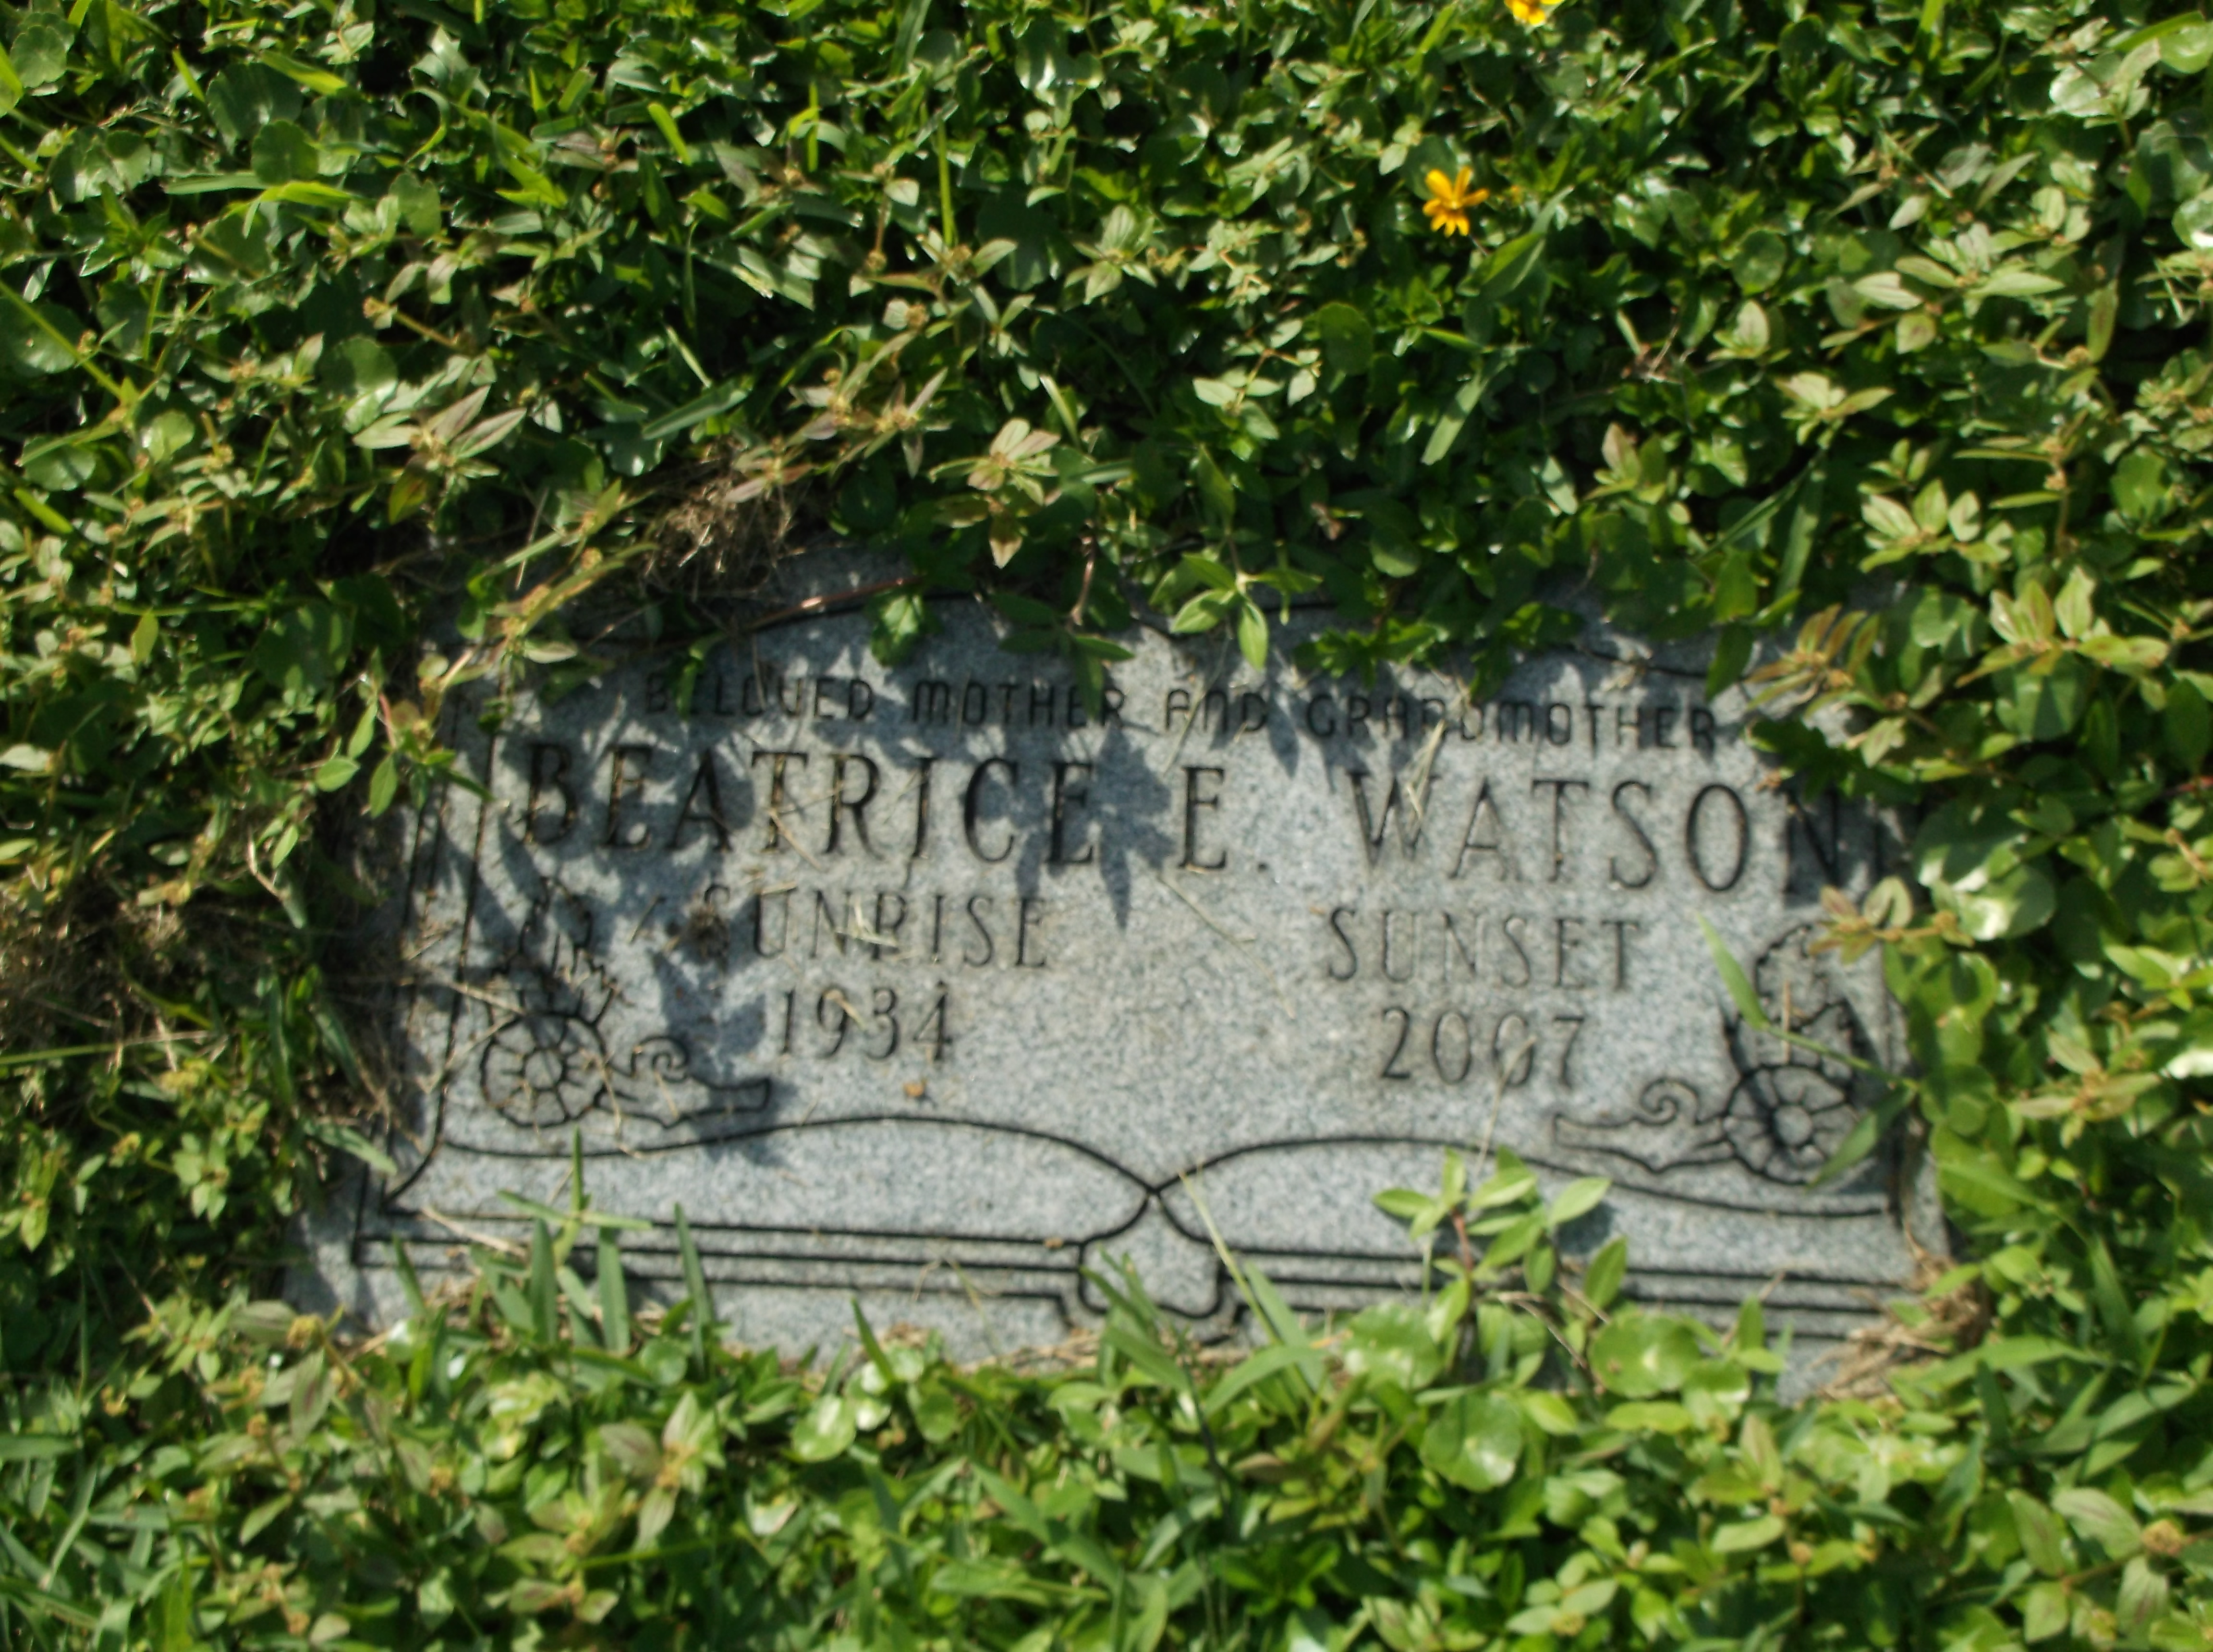 Beatrice E Watson